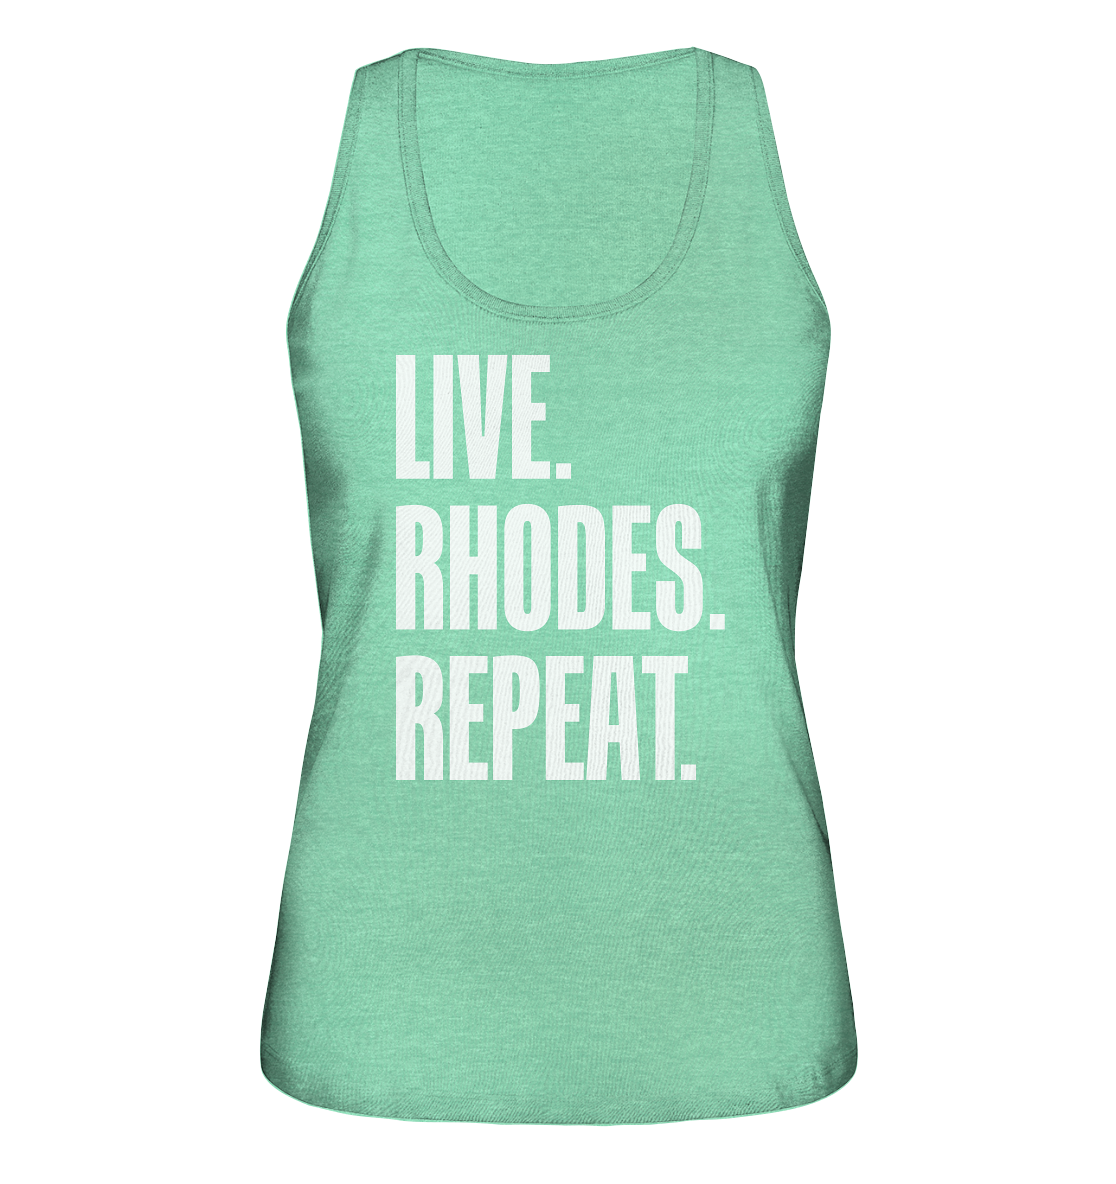 LIVE. RHODES. REPEAT. - Ladies Organic Tank-Top